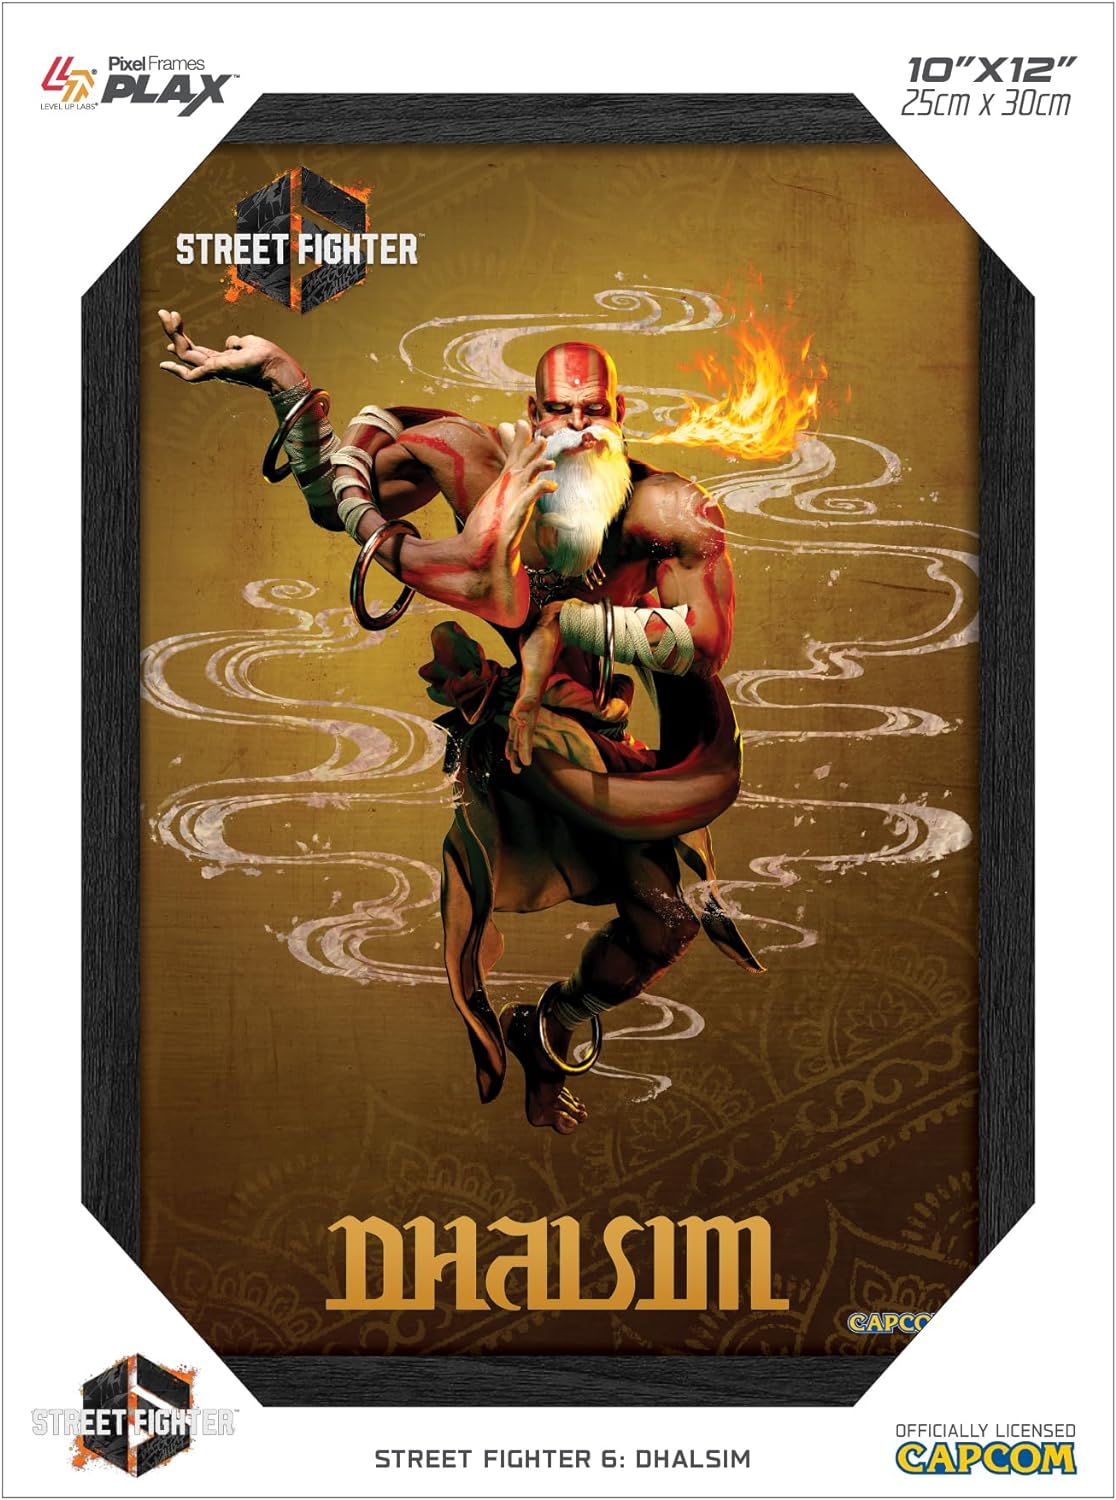 Pixel Frames Plax - Street Fighter 6: Dhalsim